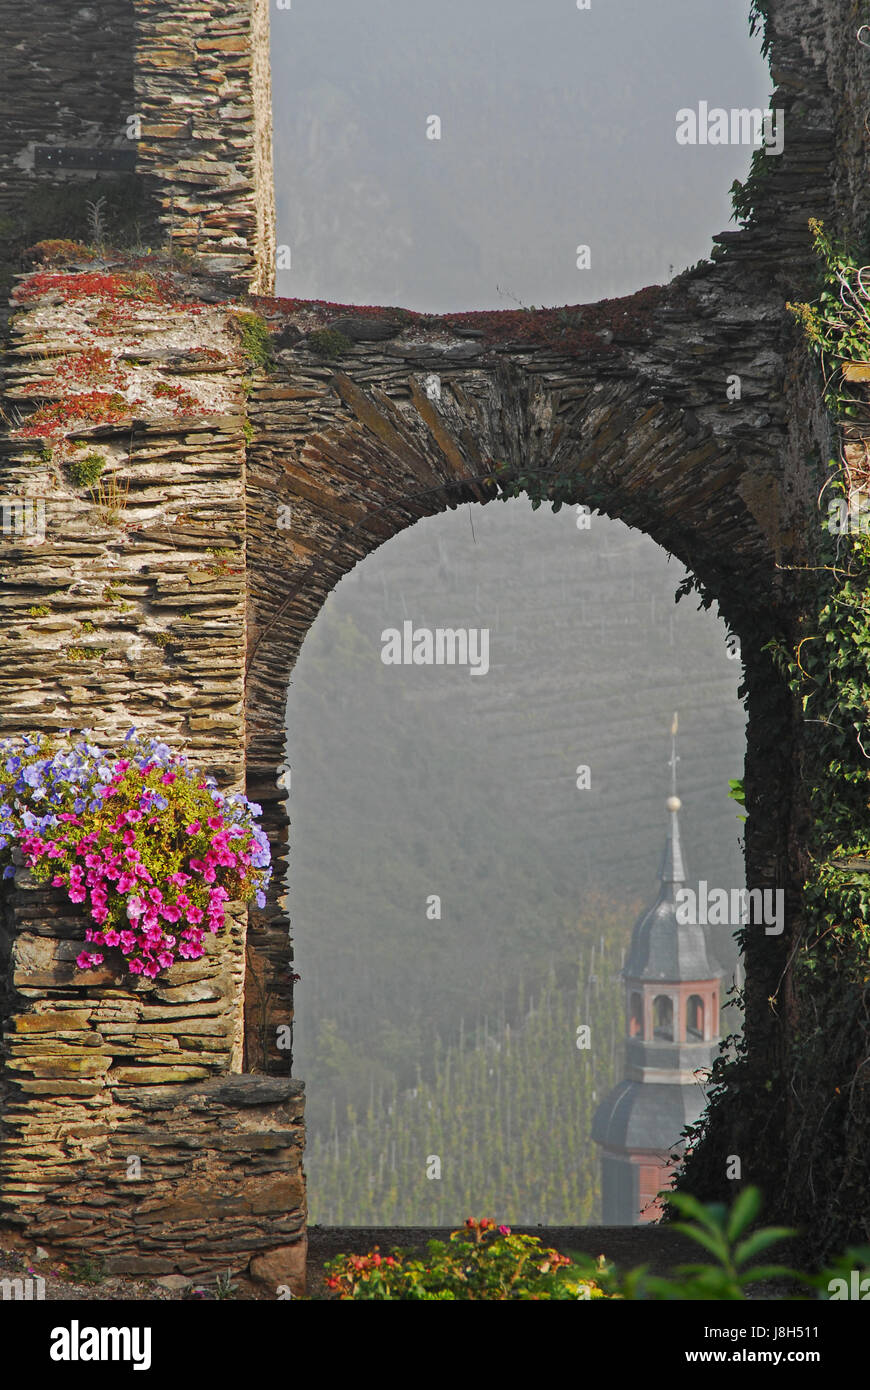 mosel, hatchet stone, chateau, castle, church, flower, plant, fog, flowers, Stock Photo